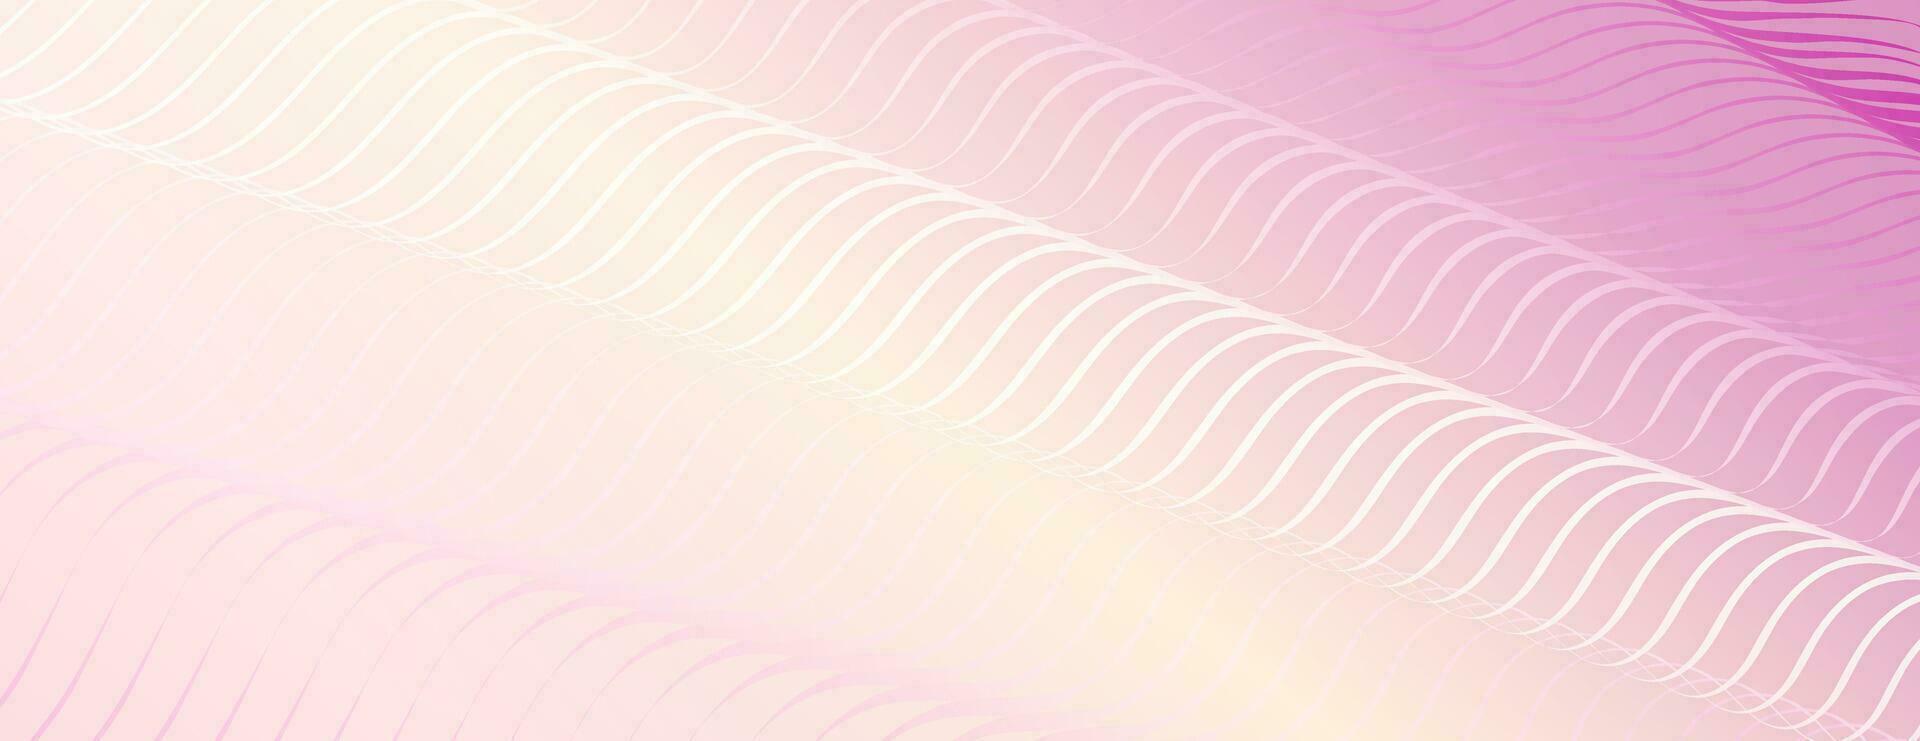 vector resumen ola línea degradado antecedentes. vibrante trama de semitonos ligero púrpura, rosado amarillo degradado ola fon. moderno suave tartán ondulado antecedentes. traje para póster, sitio web, rebaja